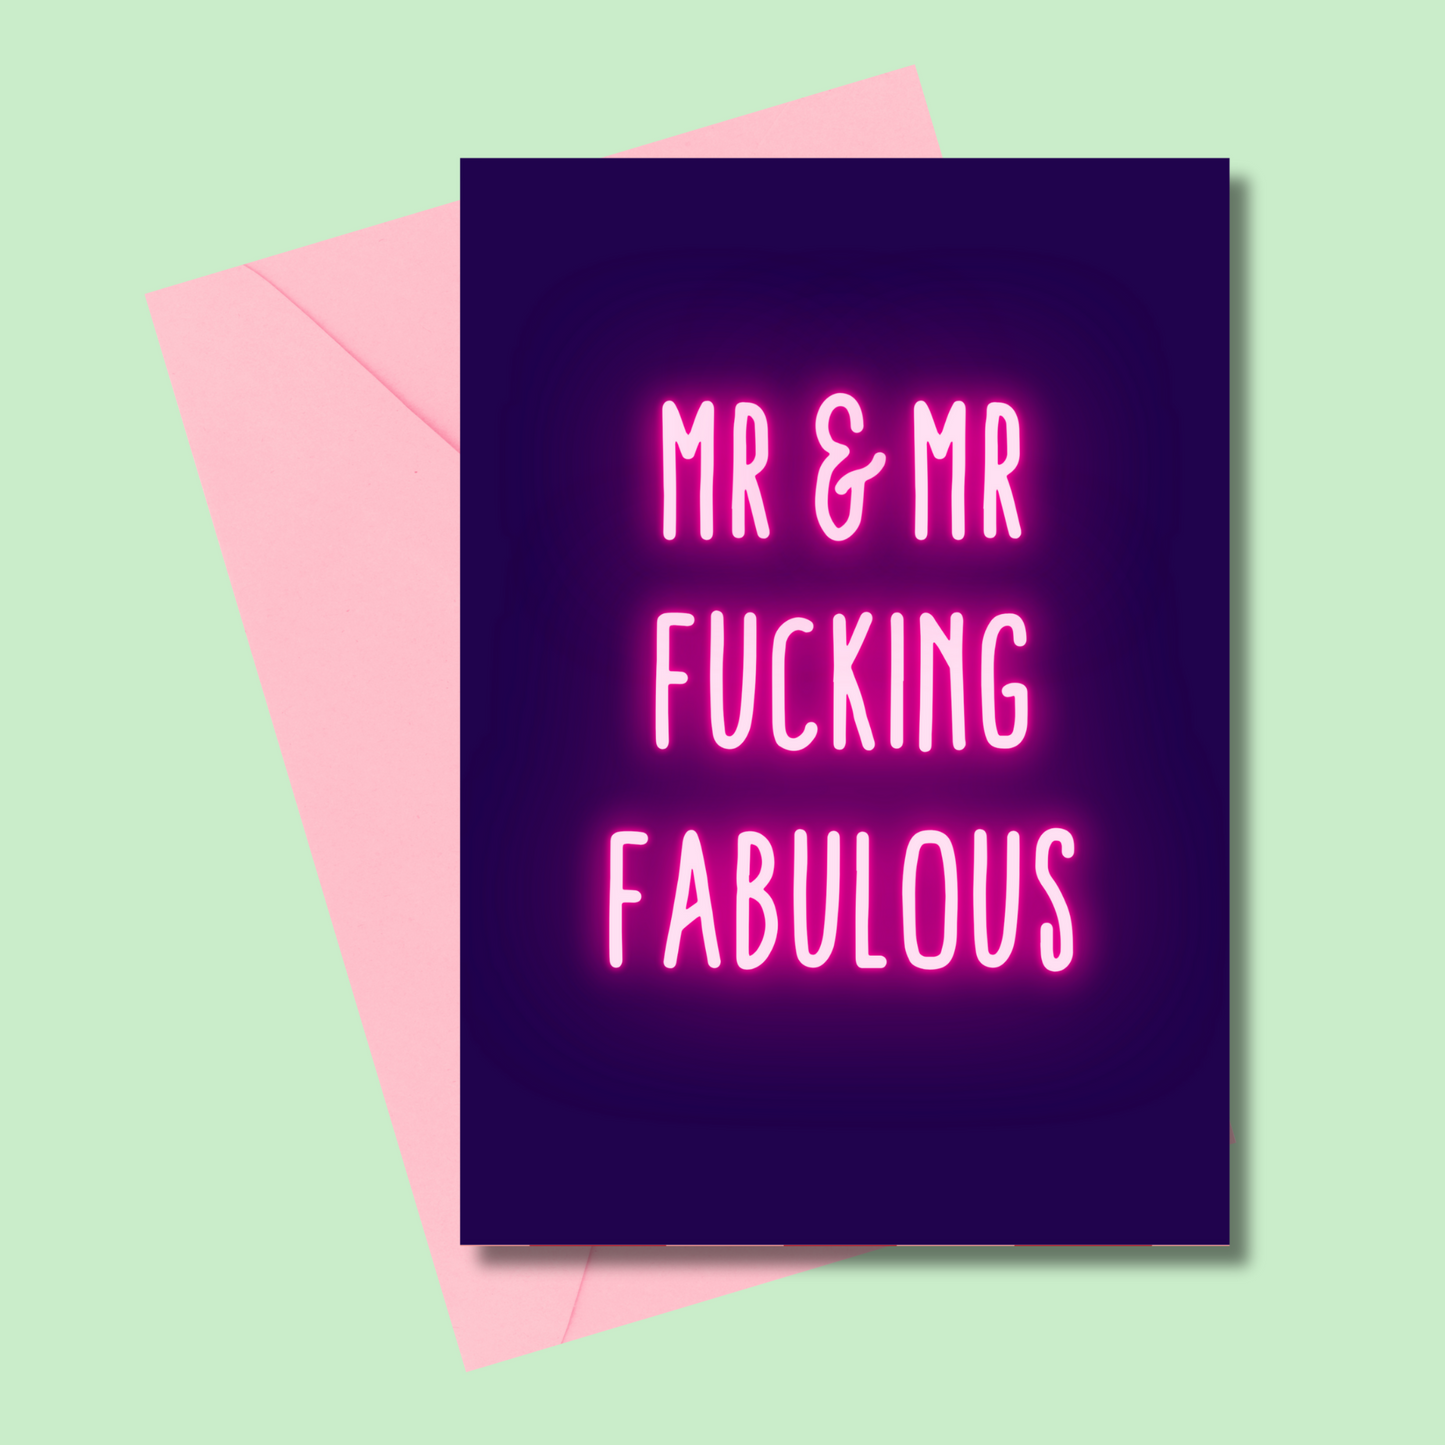 Mr & Mr F*cking Fabulous (5x7” print/card) 🏳️‍🌈